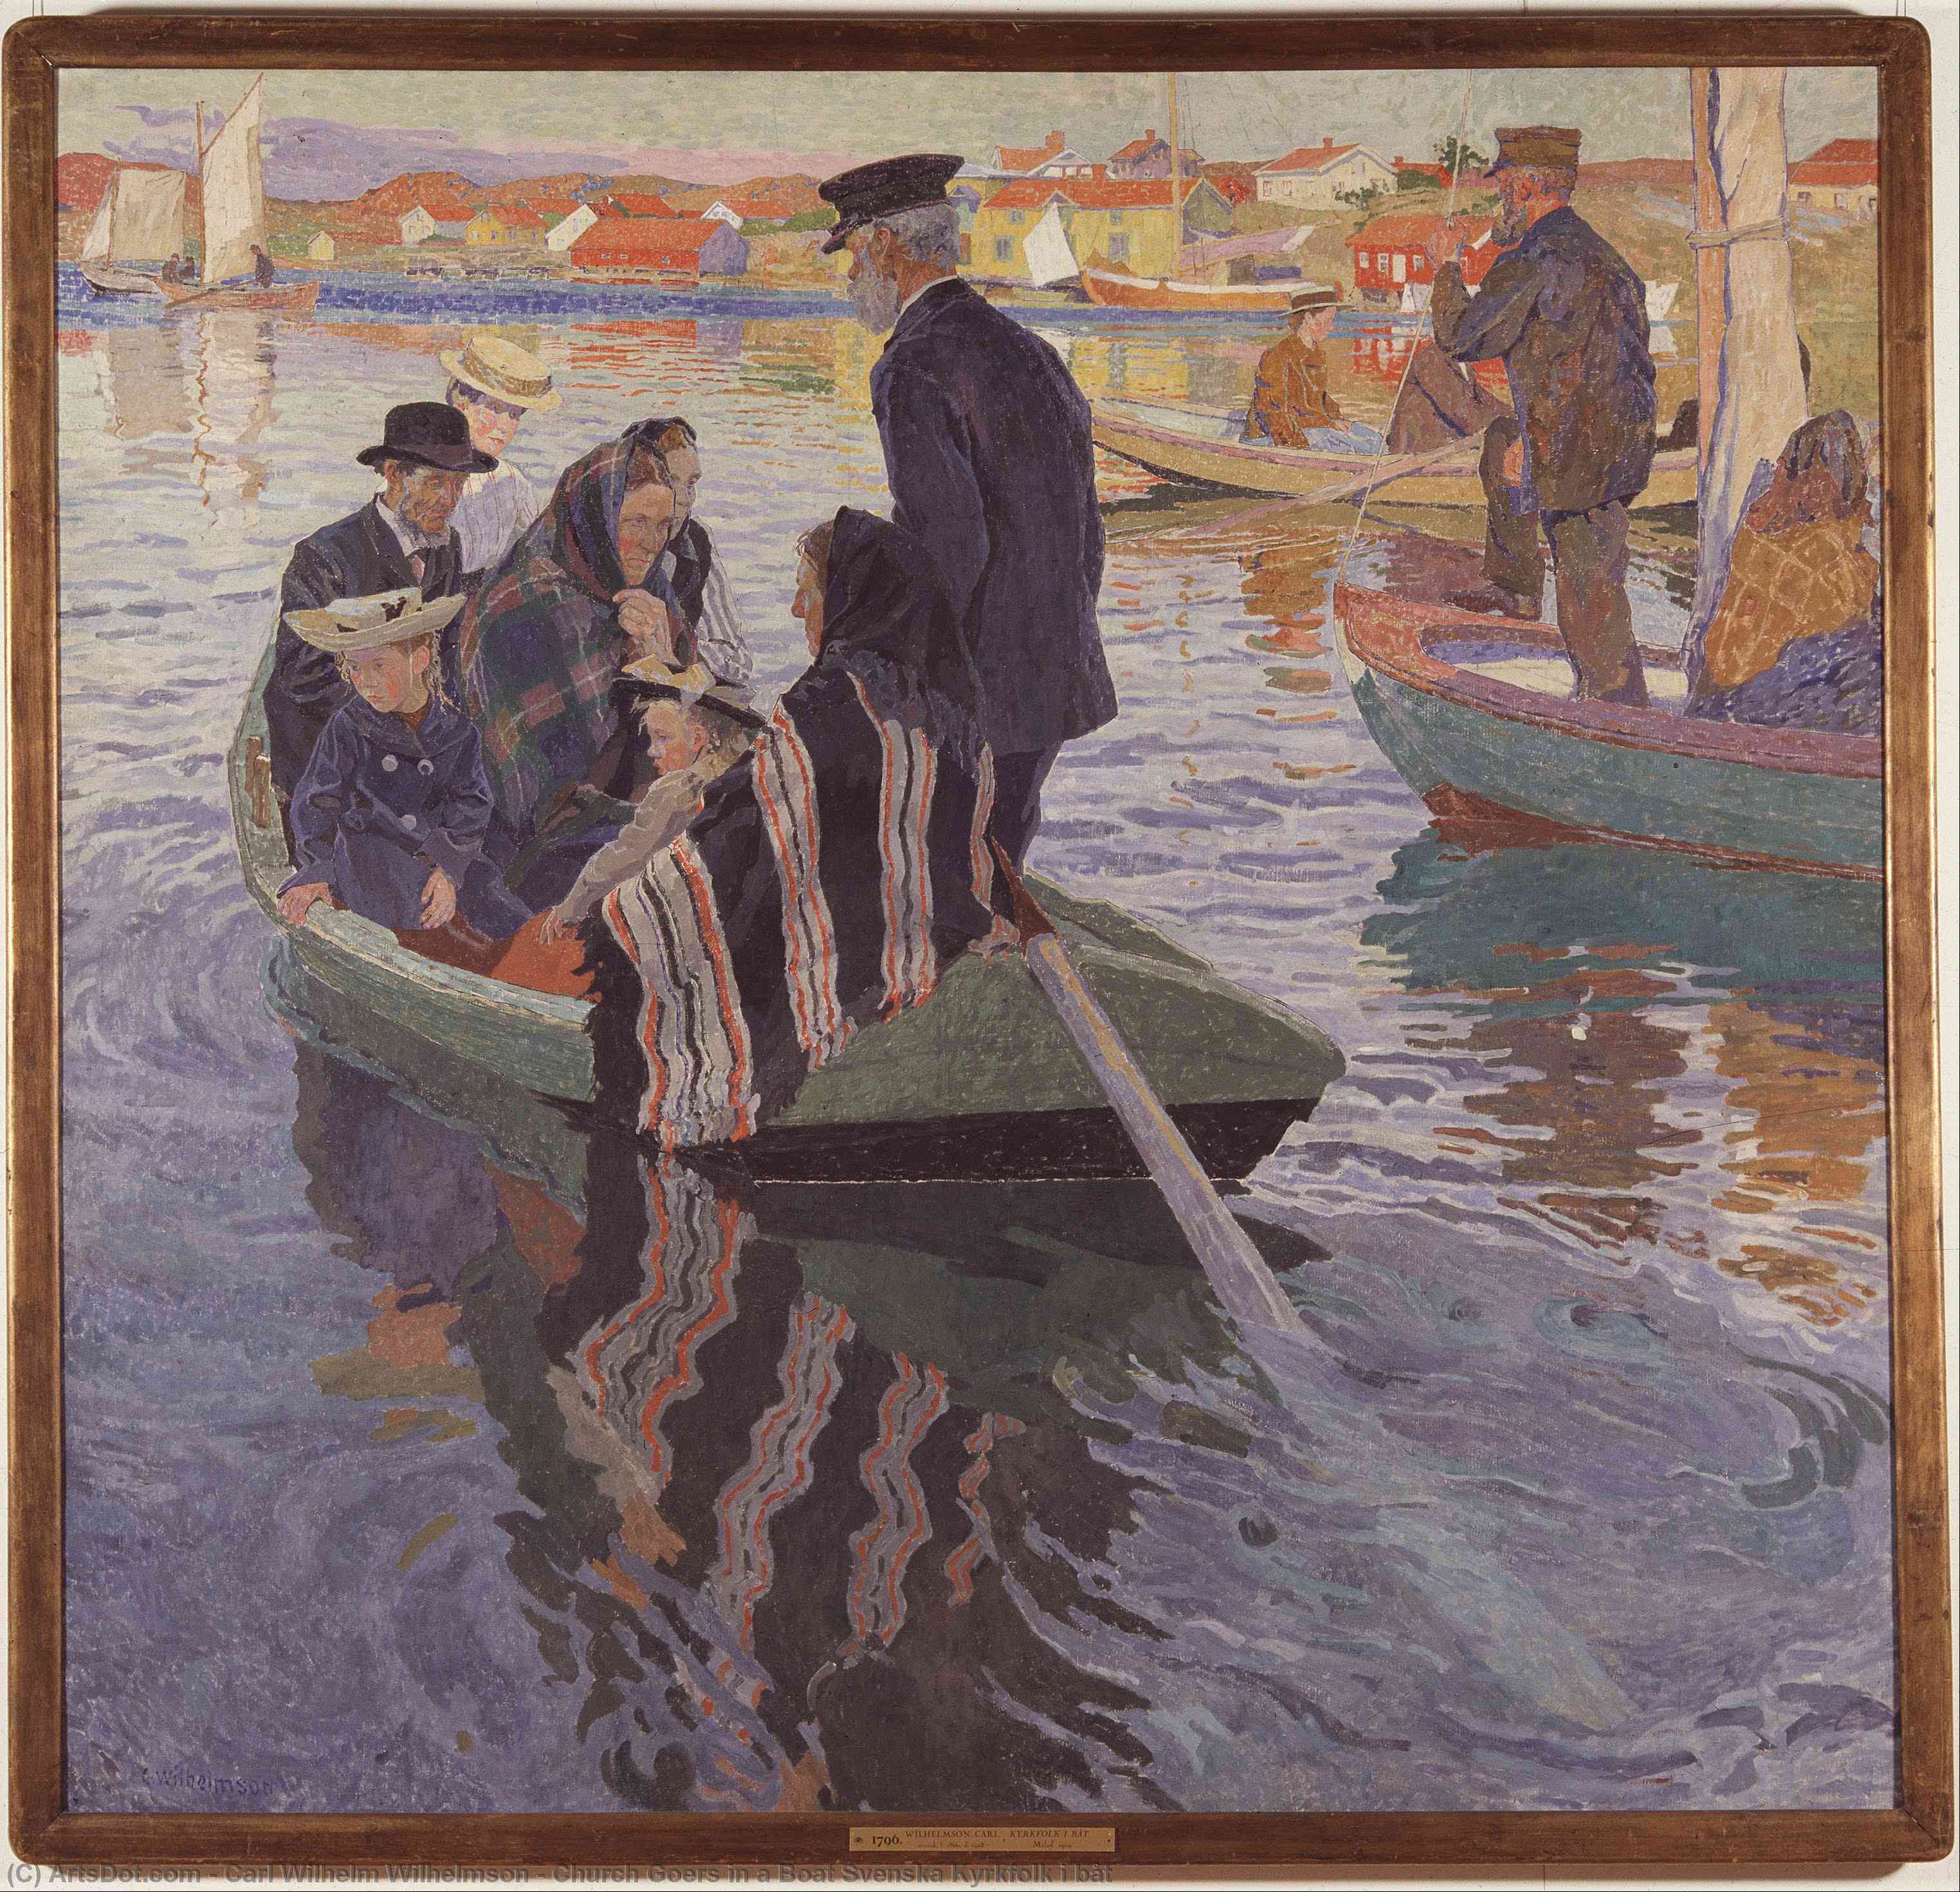 Order Paintings Reproductions Church Goers in a Boat Svenska Kyrkfolk i båt, 1909 by Carl Wilhelm Wilhelmson (1866-1928) | ArtsDot.com